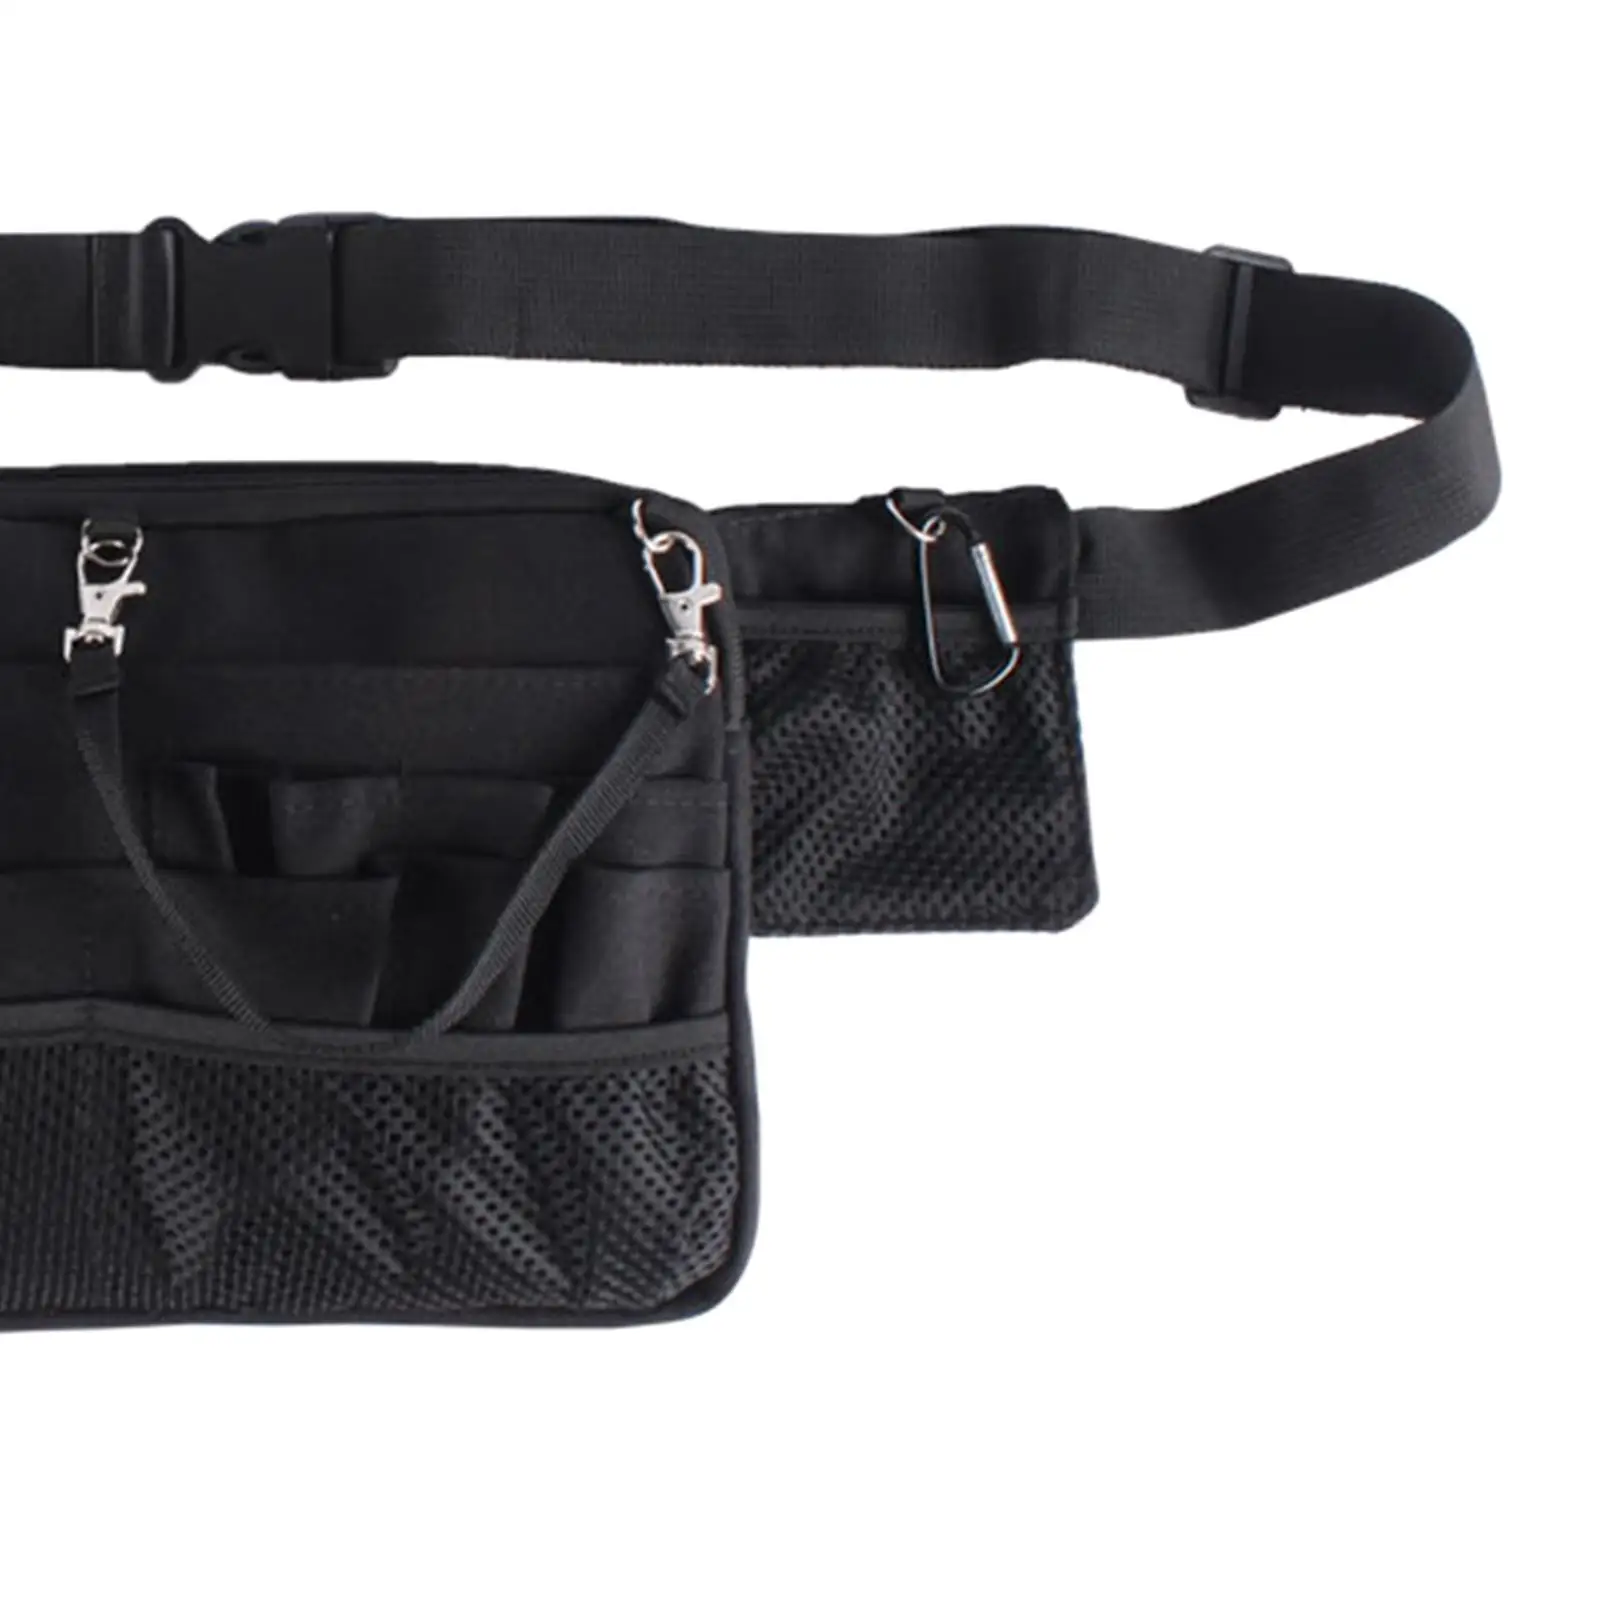  Fanny Pack Waist Bag Women Adjustable Strap with Pack Pocket Organiser Nursing Organizer Belt Bag Tool Belt Pouch